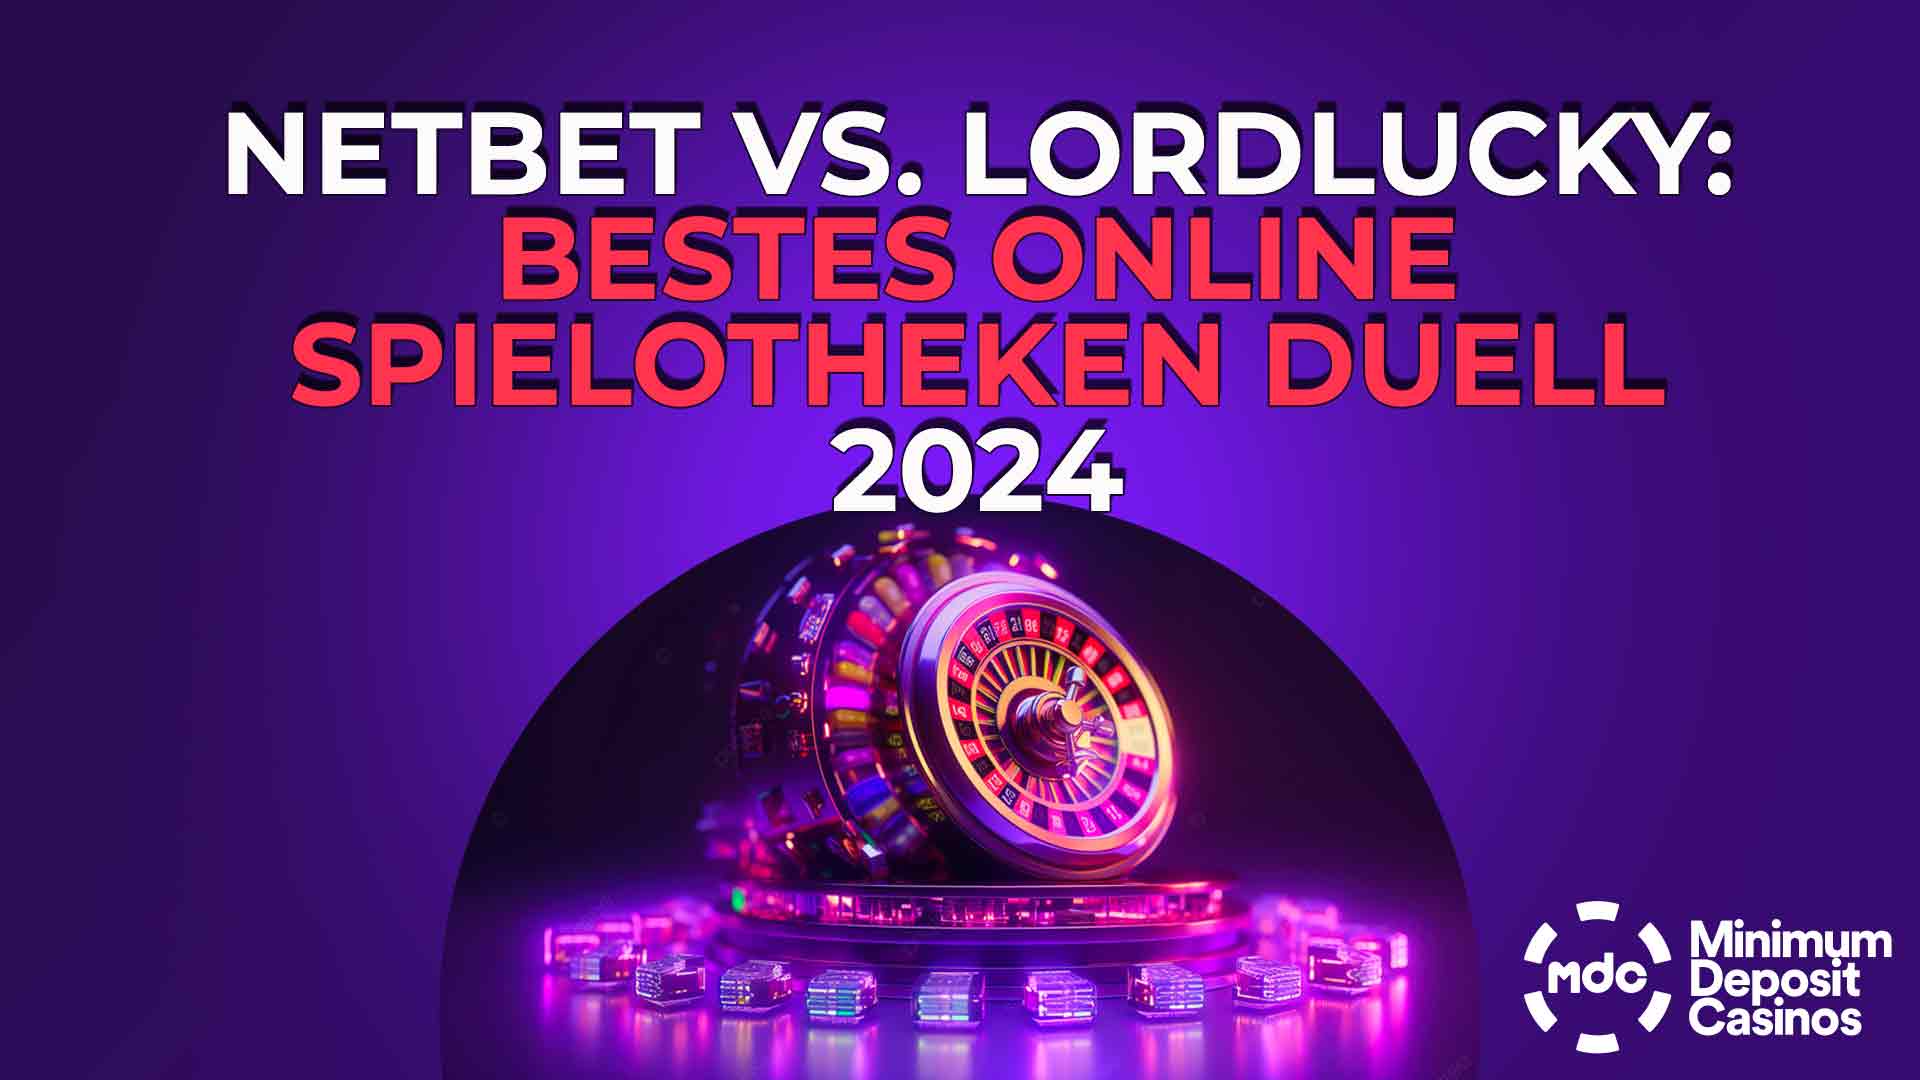 NetBet vs. LordLucky: Bestes Online Spielotheken Duell 2024